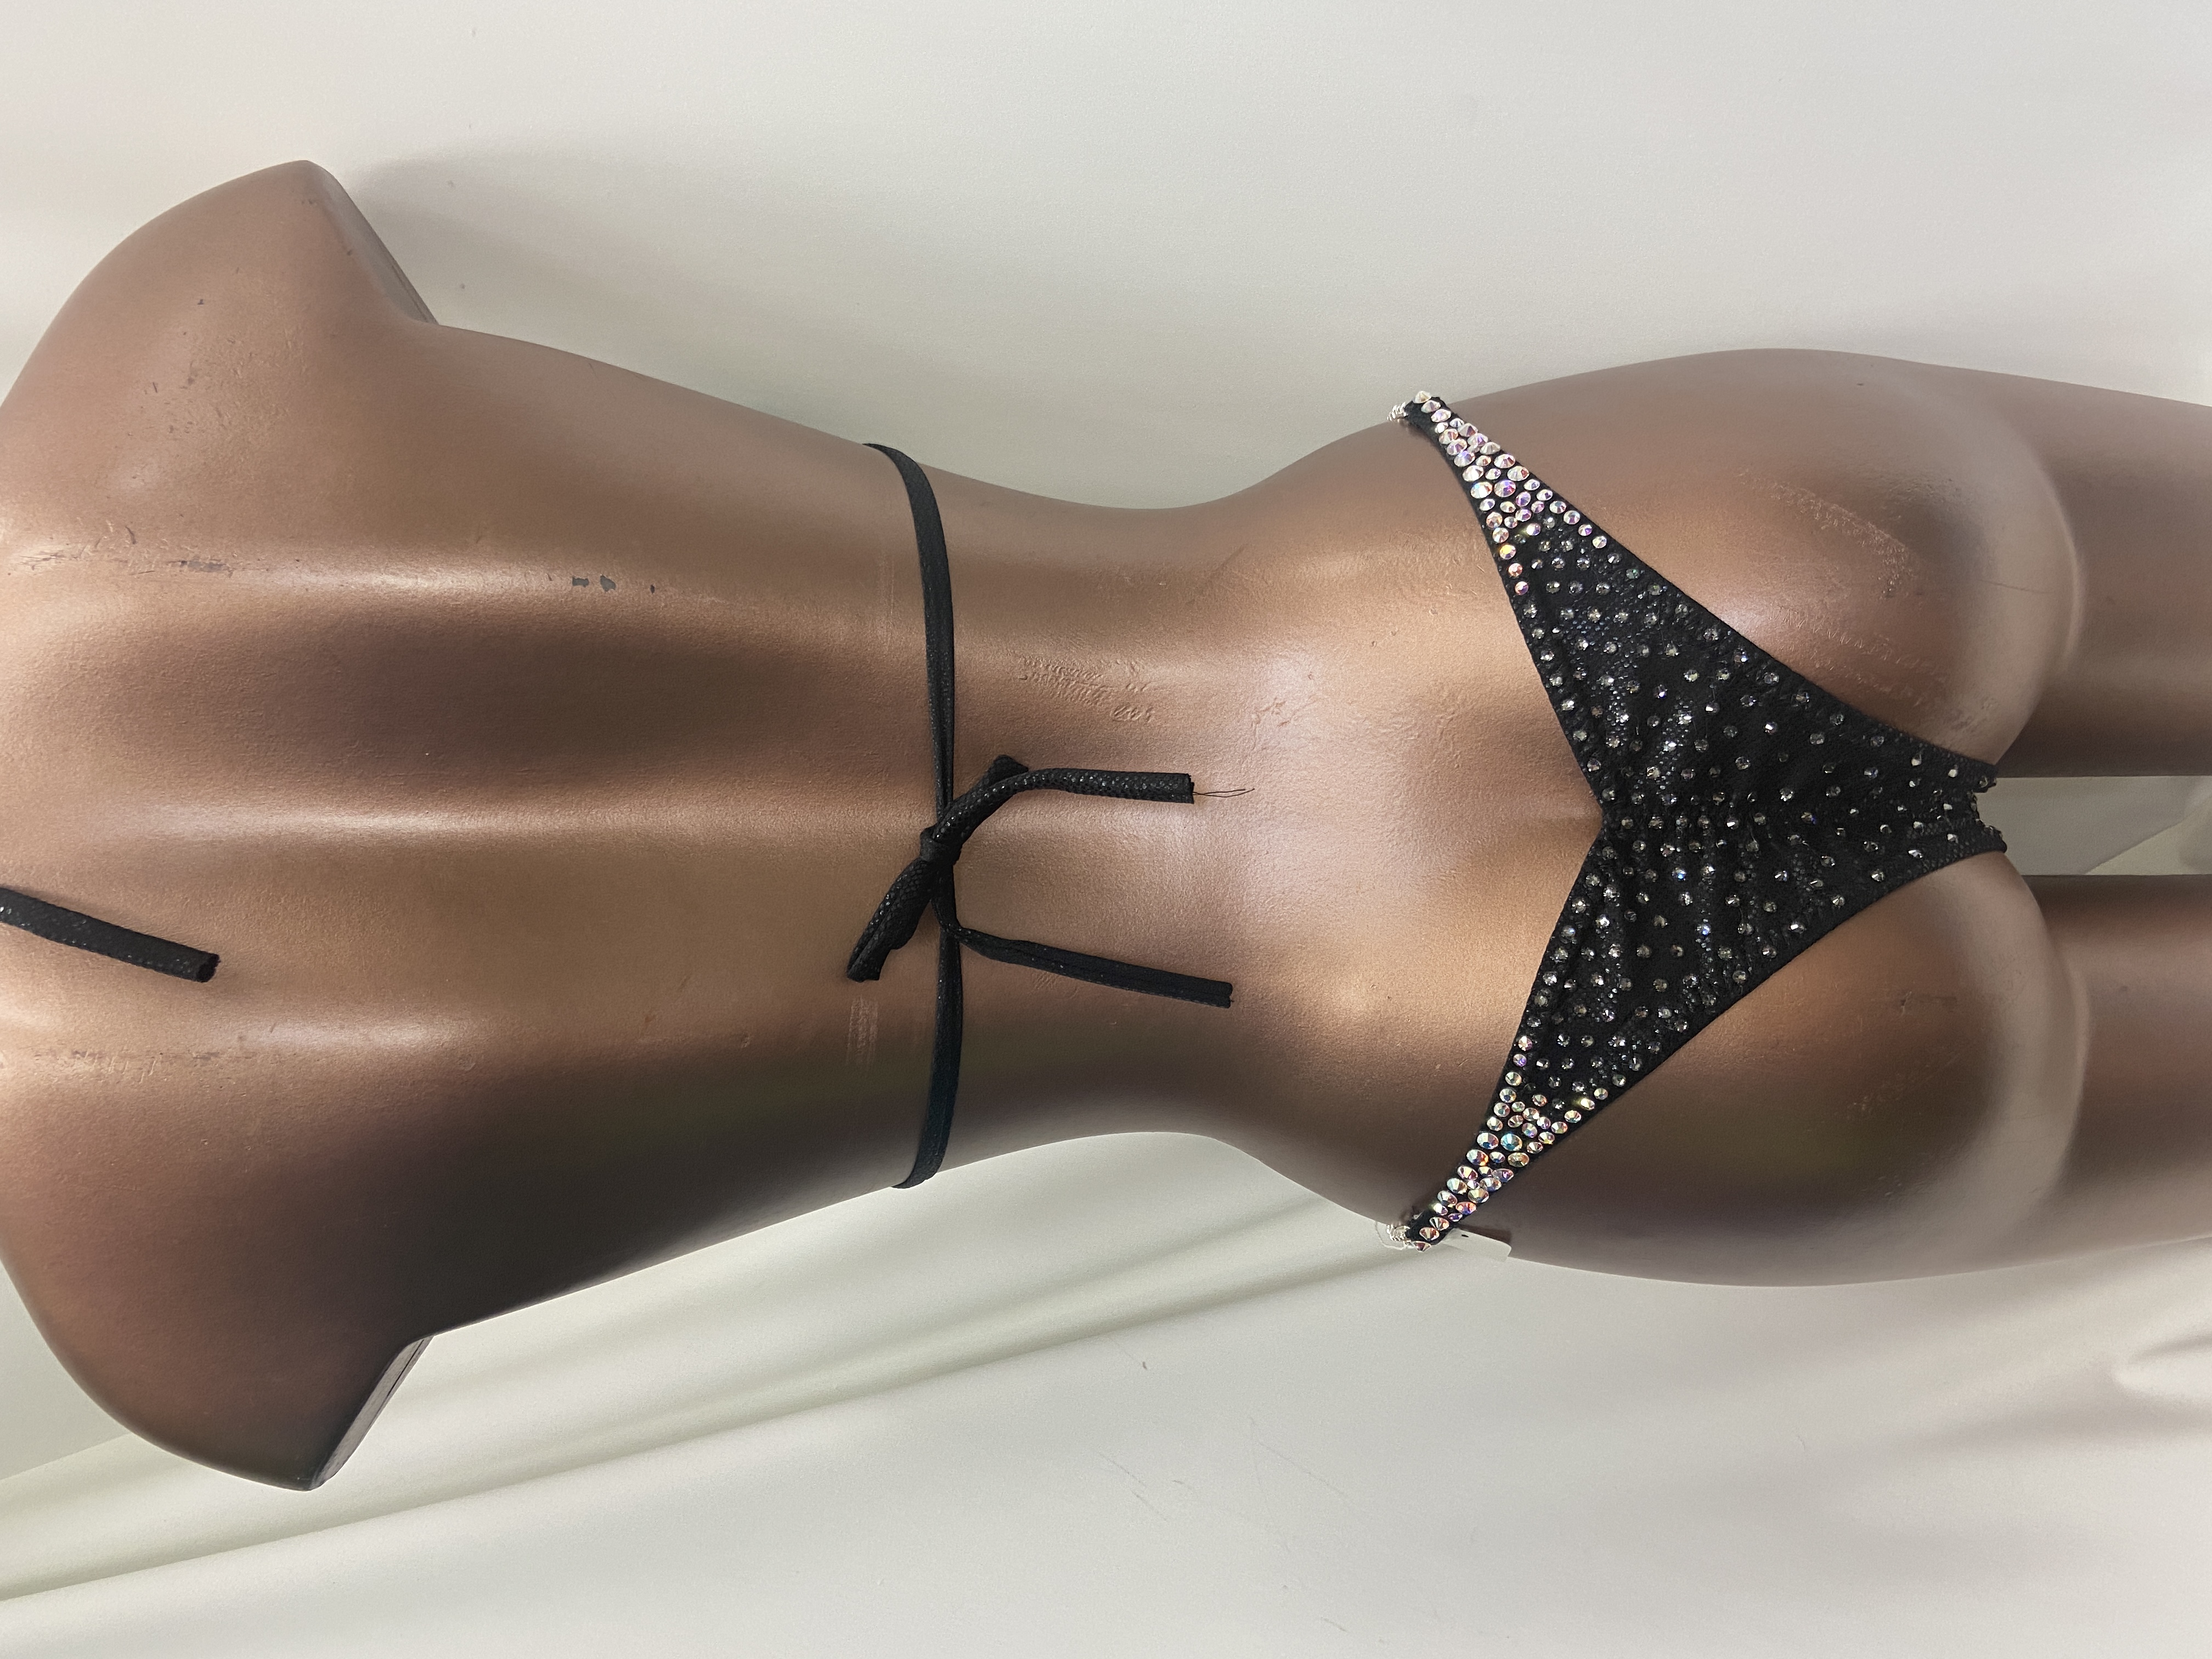 Black hologram Bikini
C Slim sliding top 
xsmall front, xxsmall V back 
$360 New